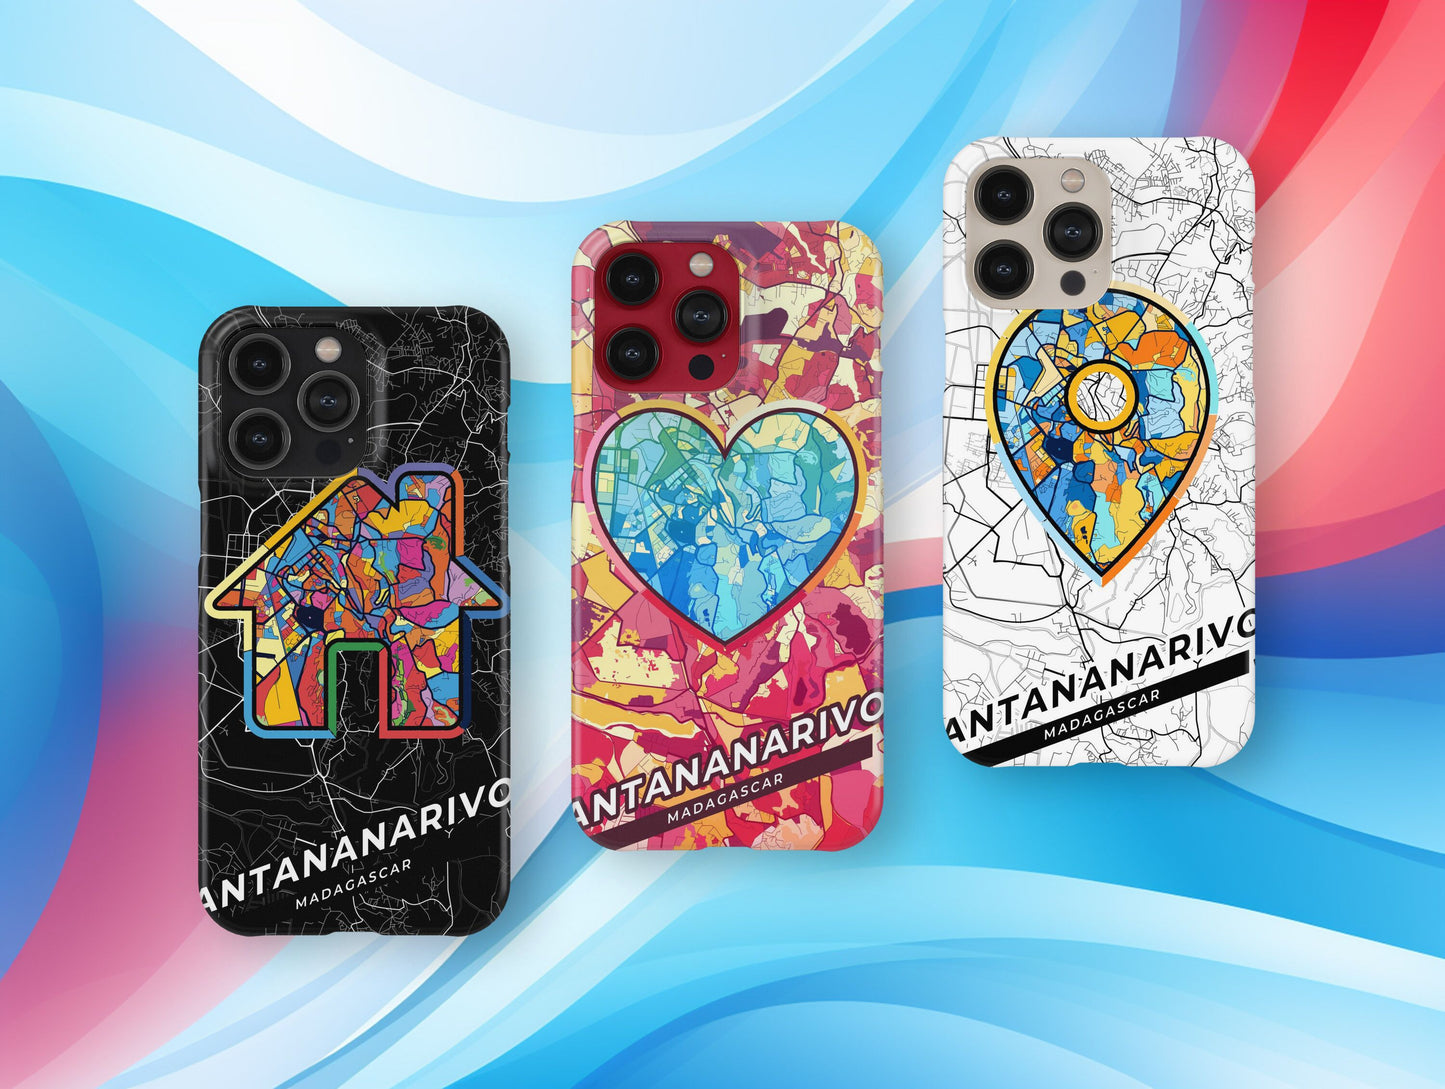 Antananarivo Madagascar slim phone case with colorful icon. Birthday, wedding or housewarming gift. Couple match cases.